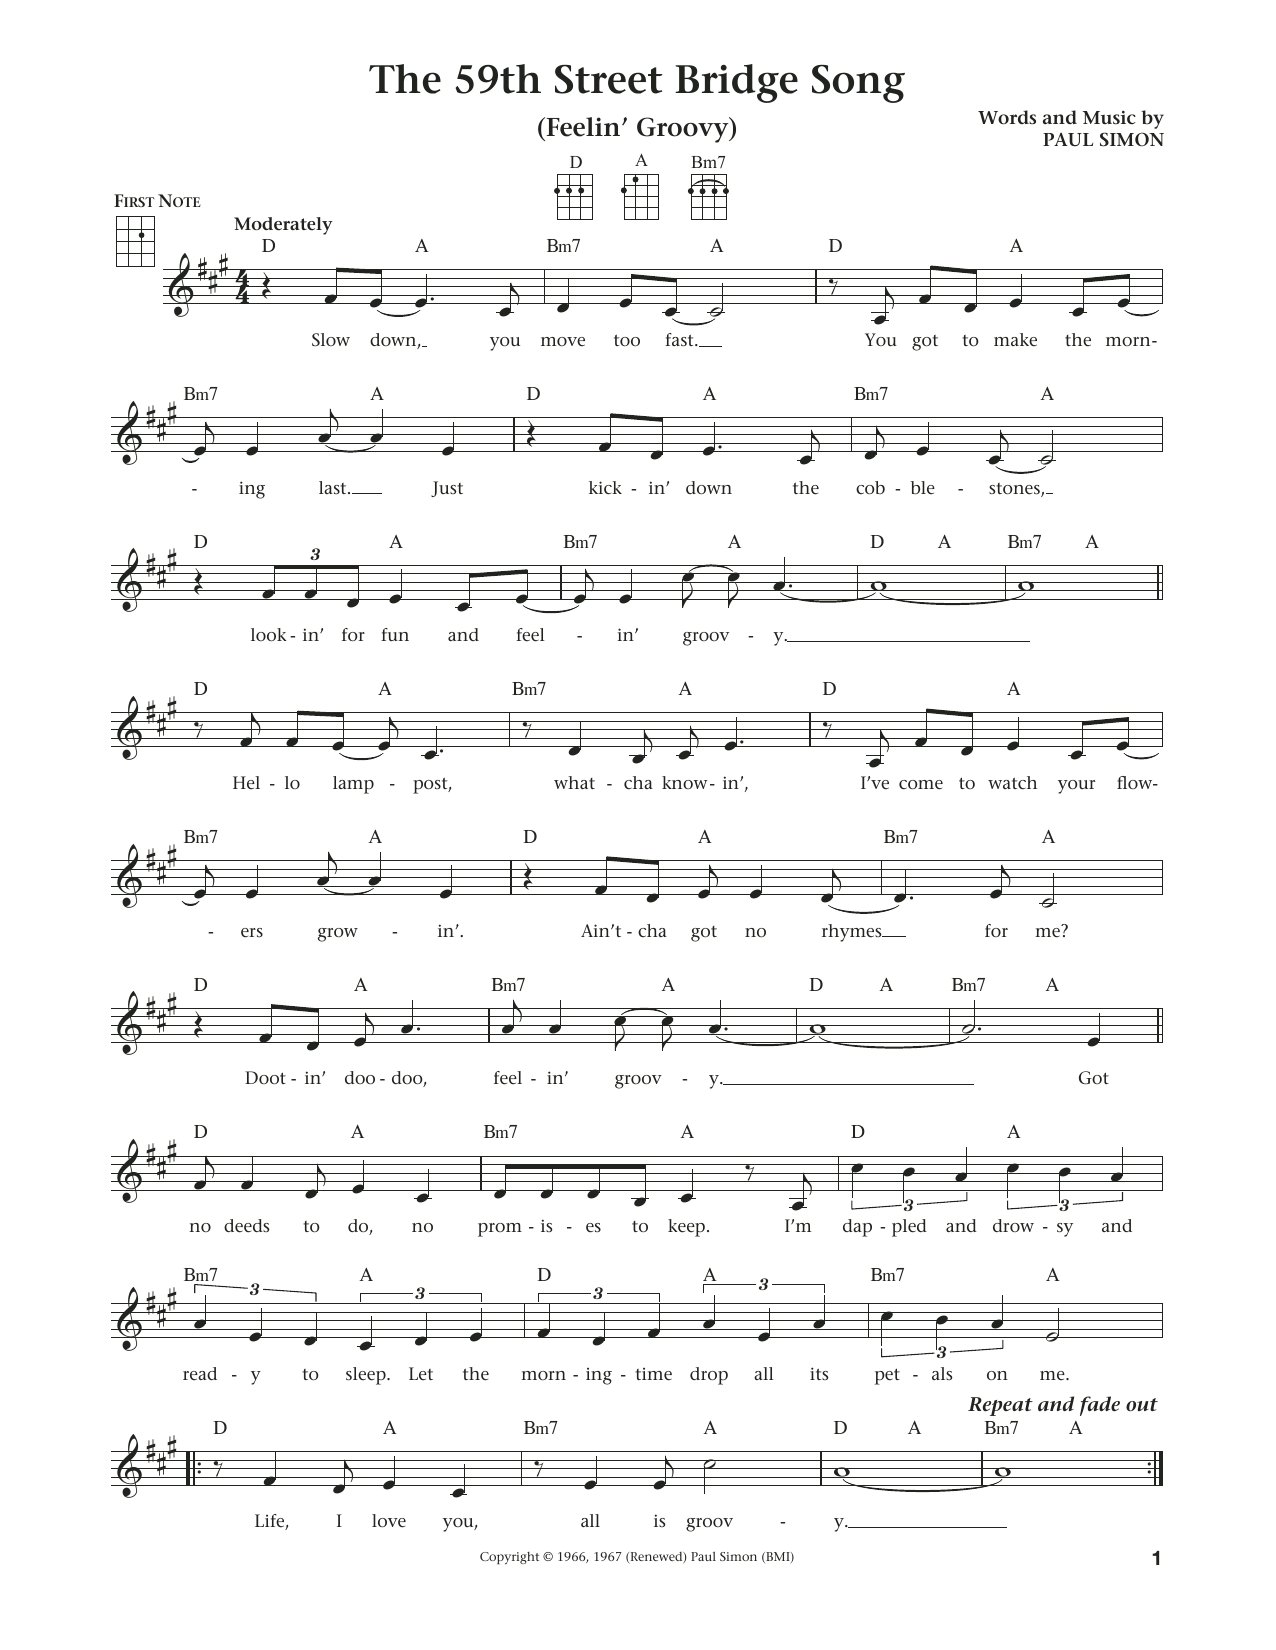 Simon & Garfunkel The 59th Street Bridge Song (Feelin' Groovy) (from The Daily Ukulele) (arr. Liz and Jim Beloff) Sheet Music Notes & Chords for Ukulele - Download or Print PDF